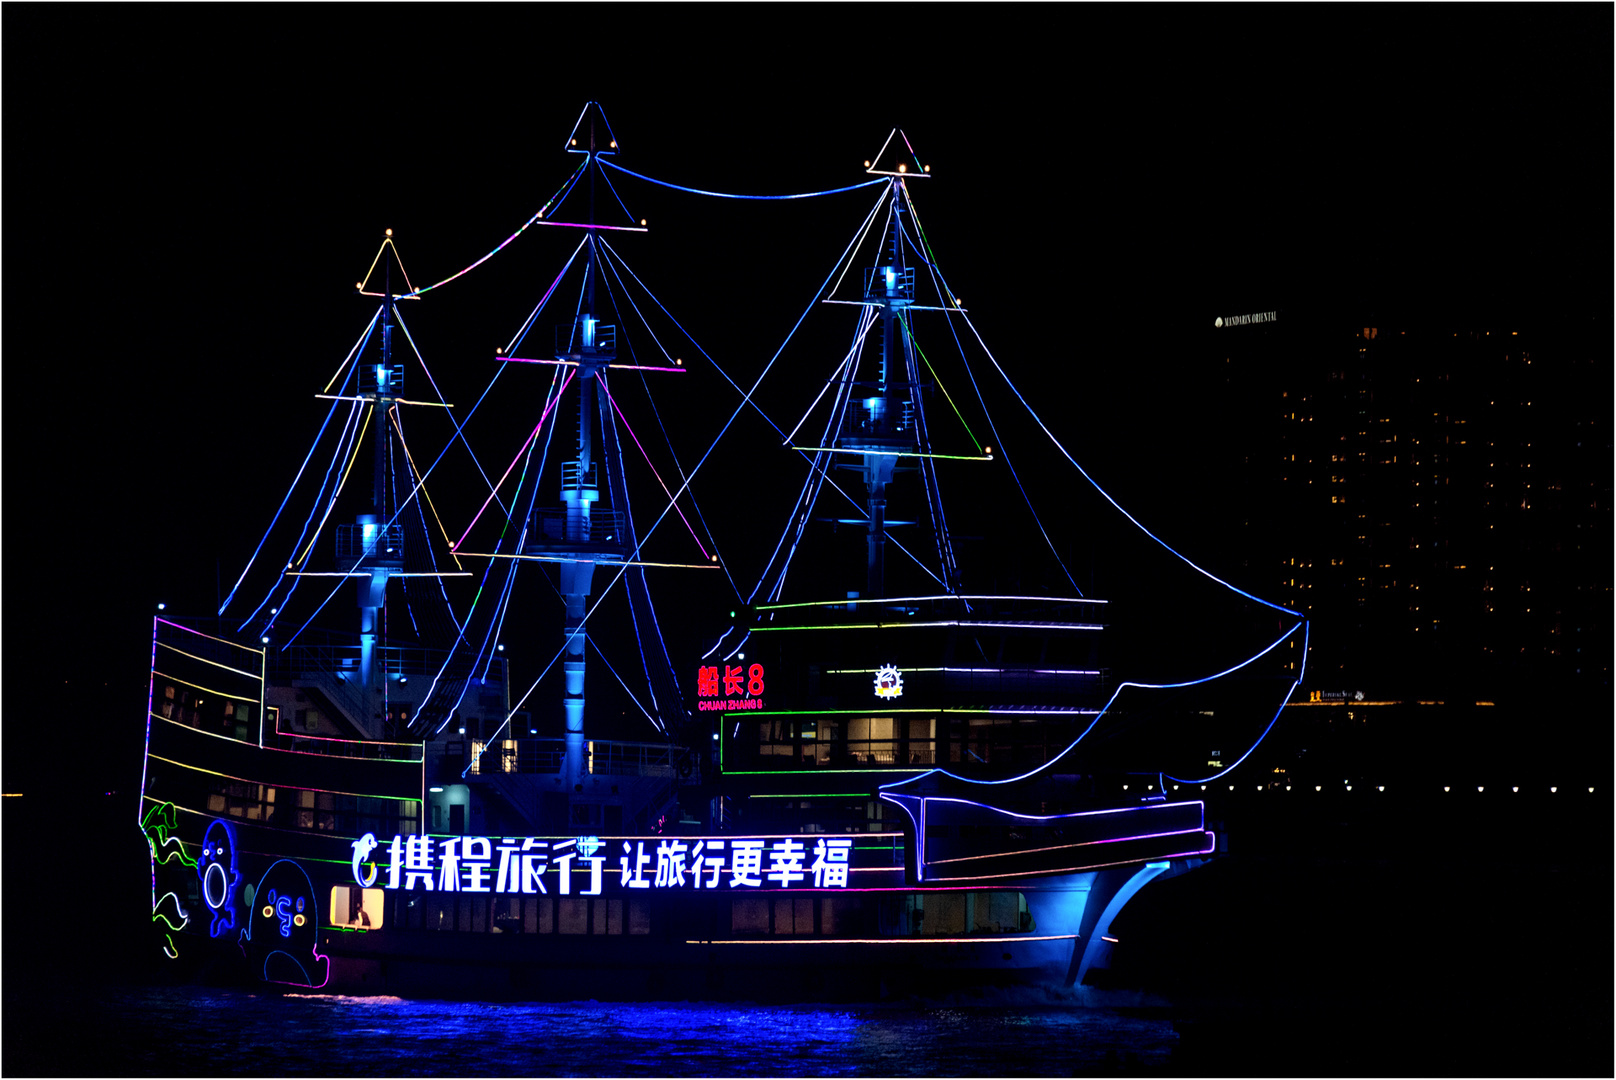 Sailing on the Huangpu River